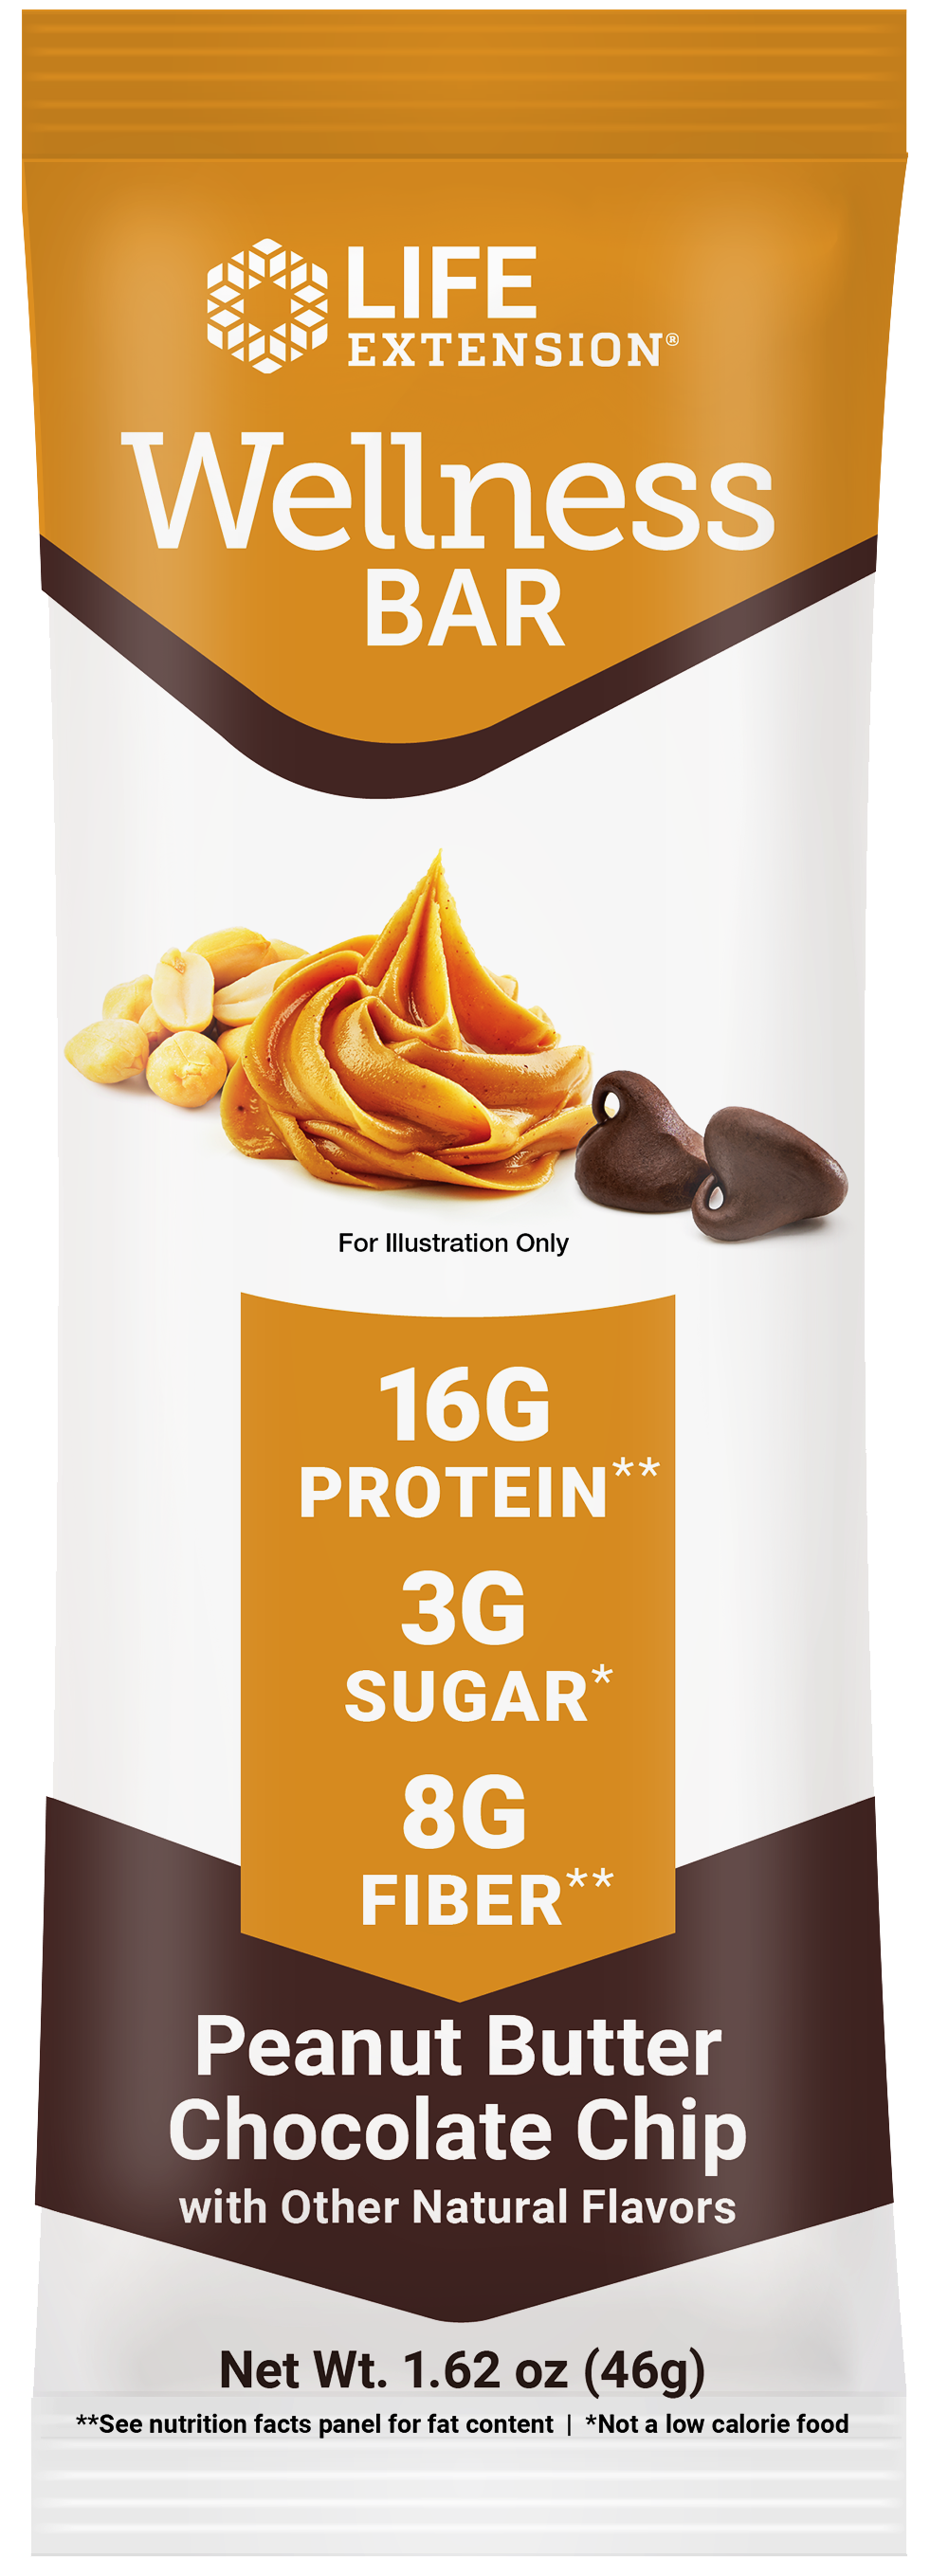 Wellness Bar Peanut Butter Chocolate Chip, entrenamiento o refrigerio saludable con 16 g de proteína, 8 g de fibra y 3 g de azúcar